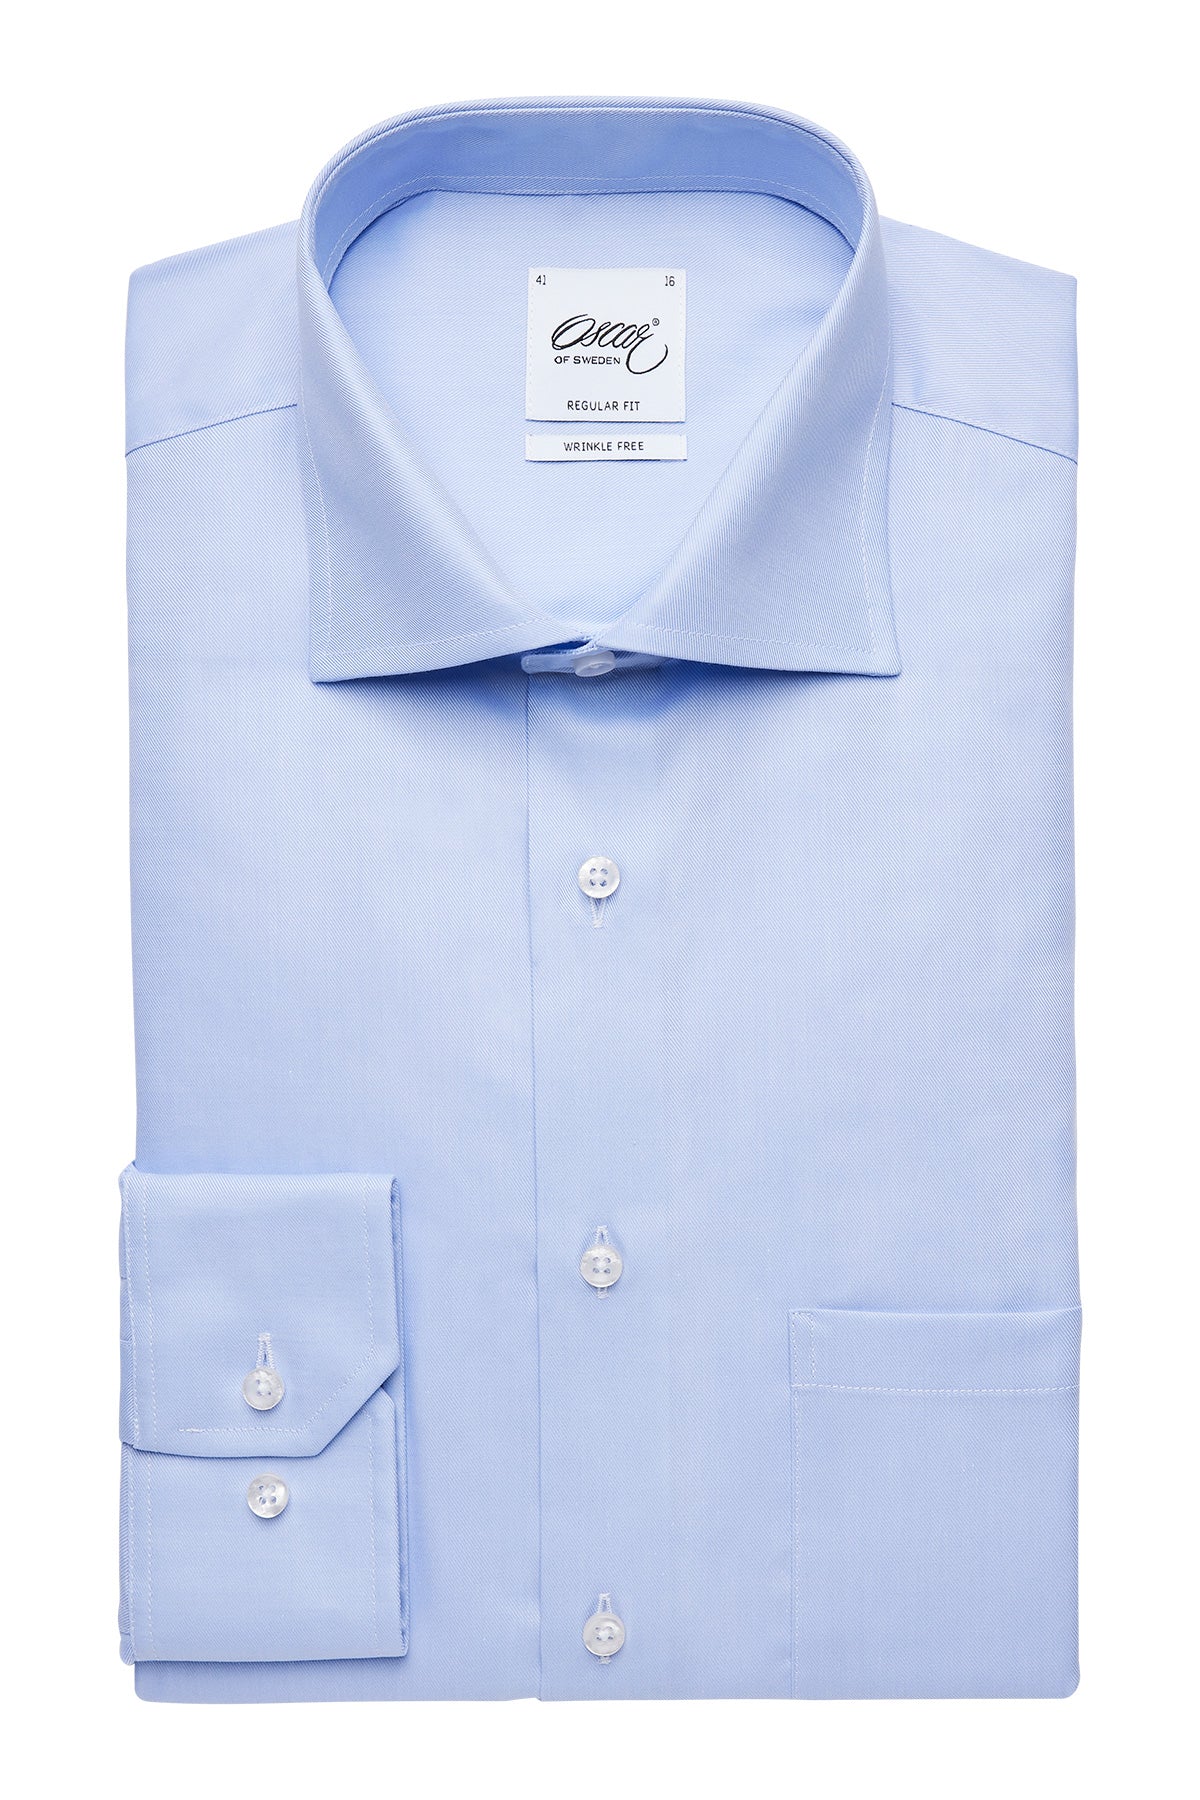 Light blue wrinkle free regular fit shirt